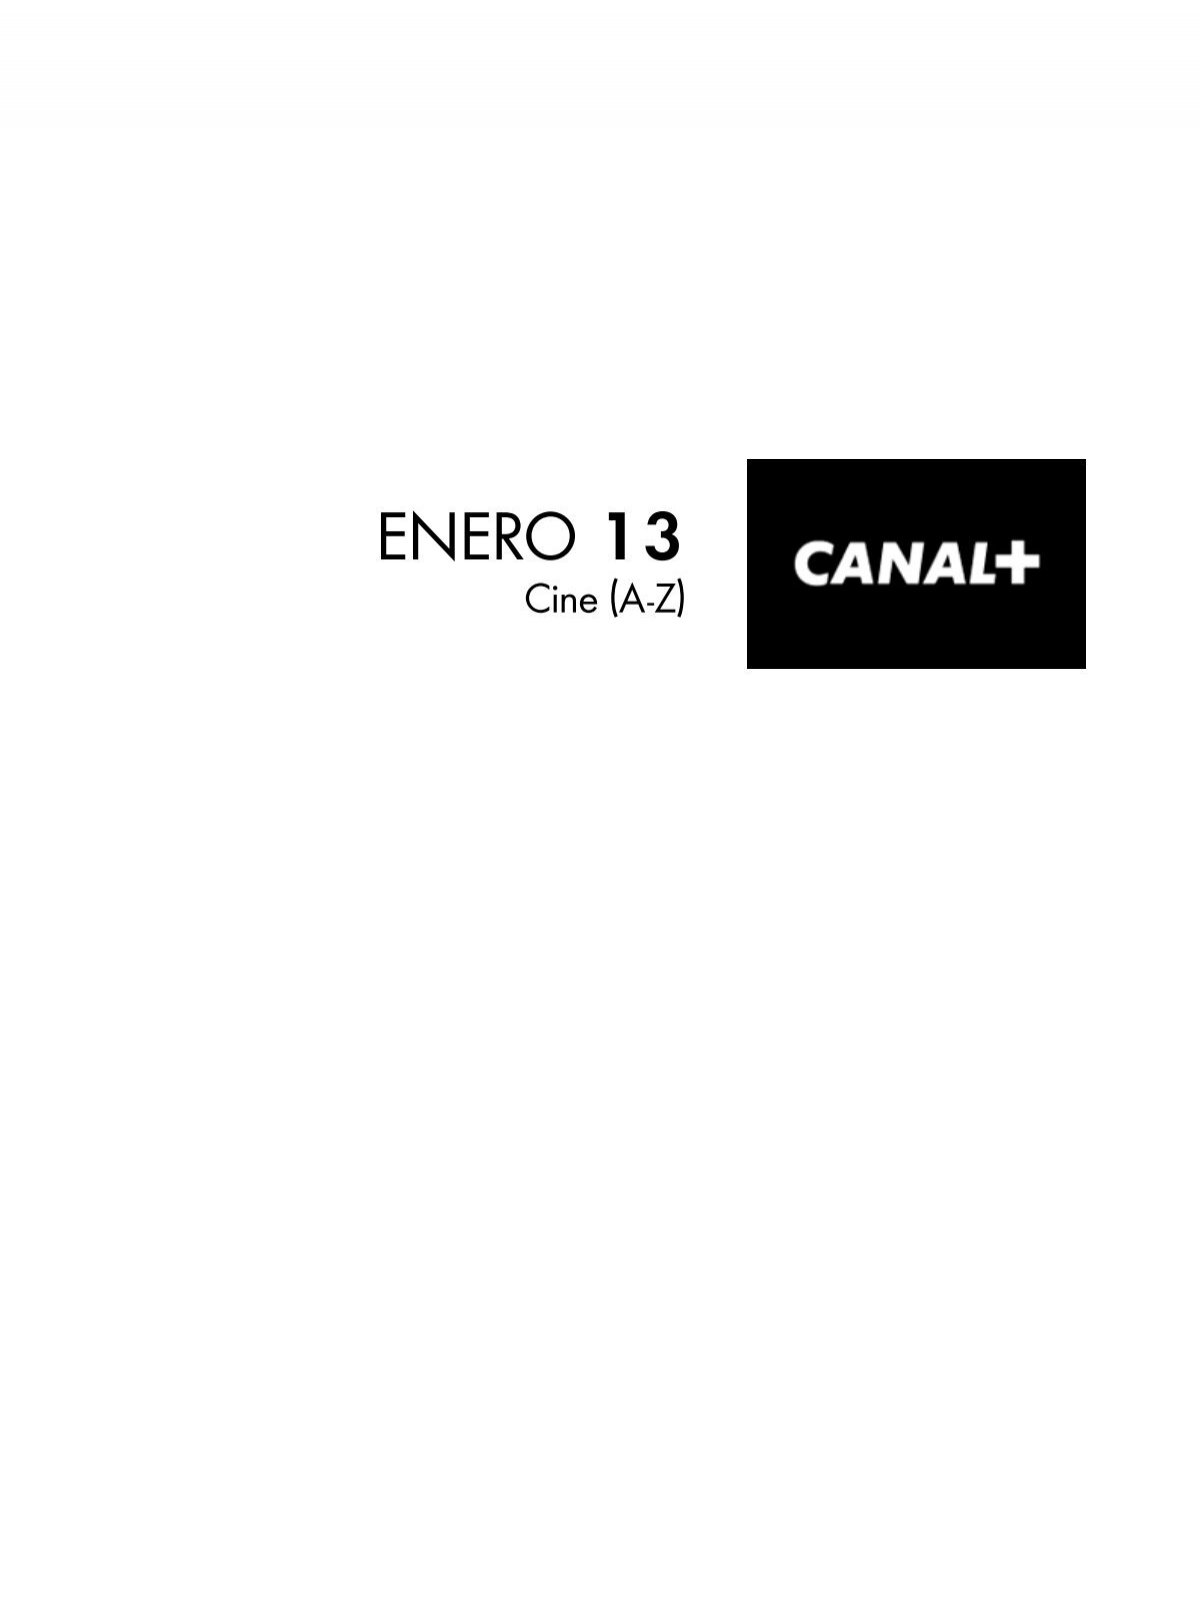 ENERO 13 - Canal +